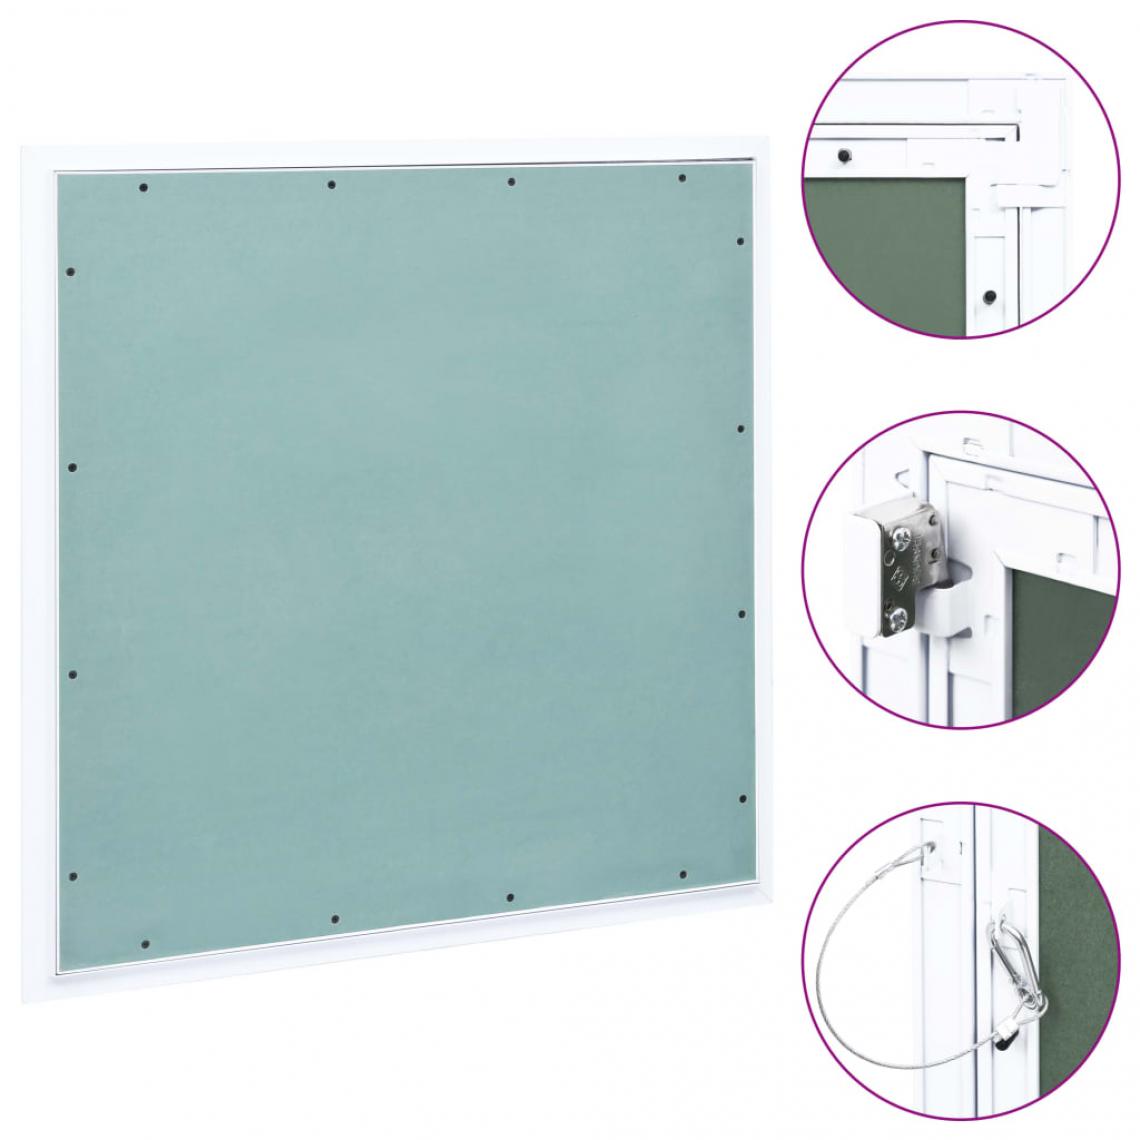 Vidaxl - vidaXL Panneau d'accès Cadre en aluminium plaque de plâtre 600x600 mm - Chatière